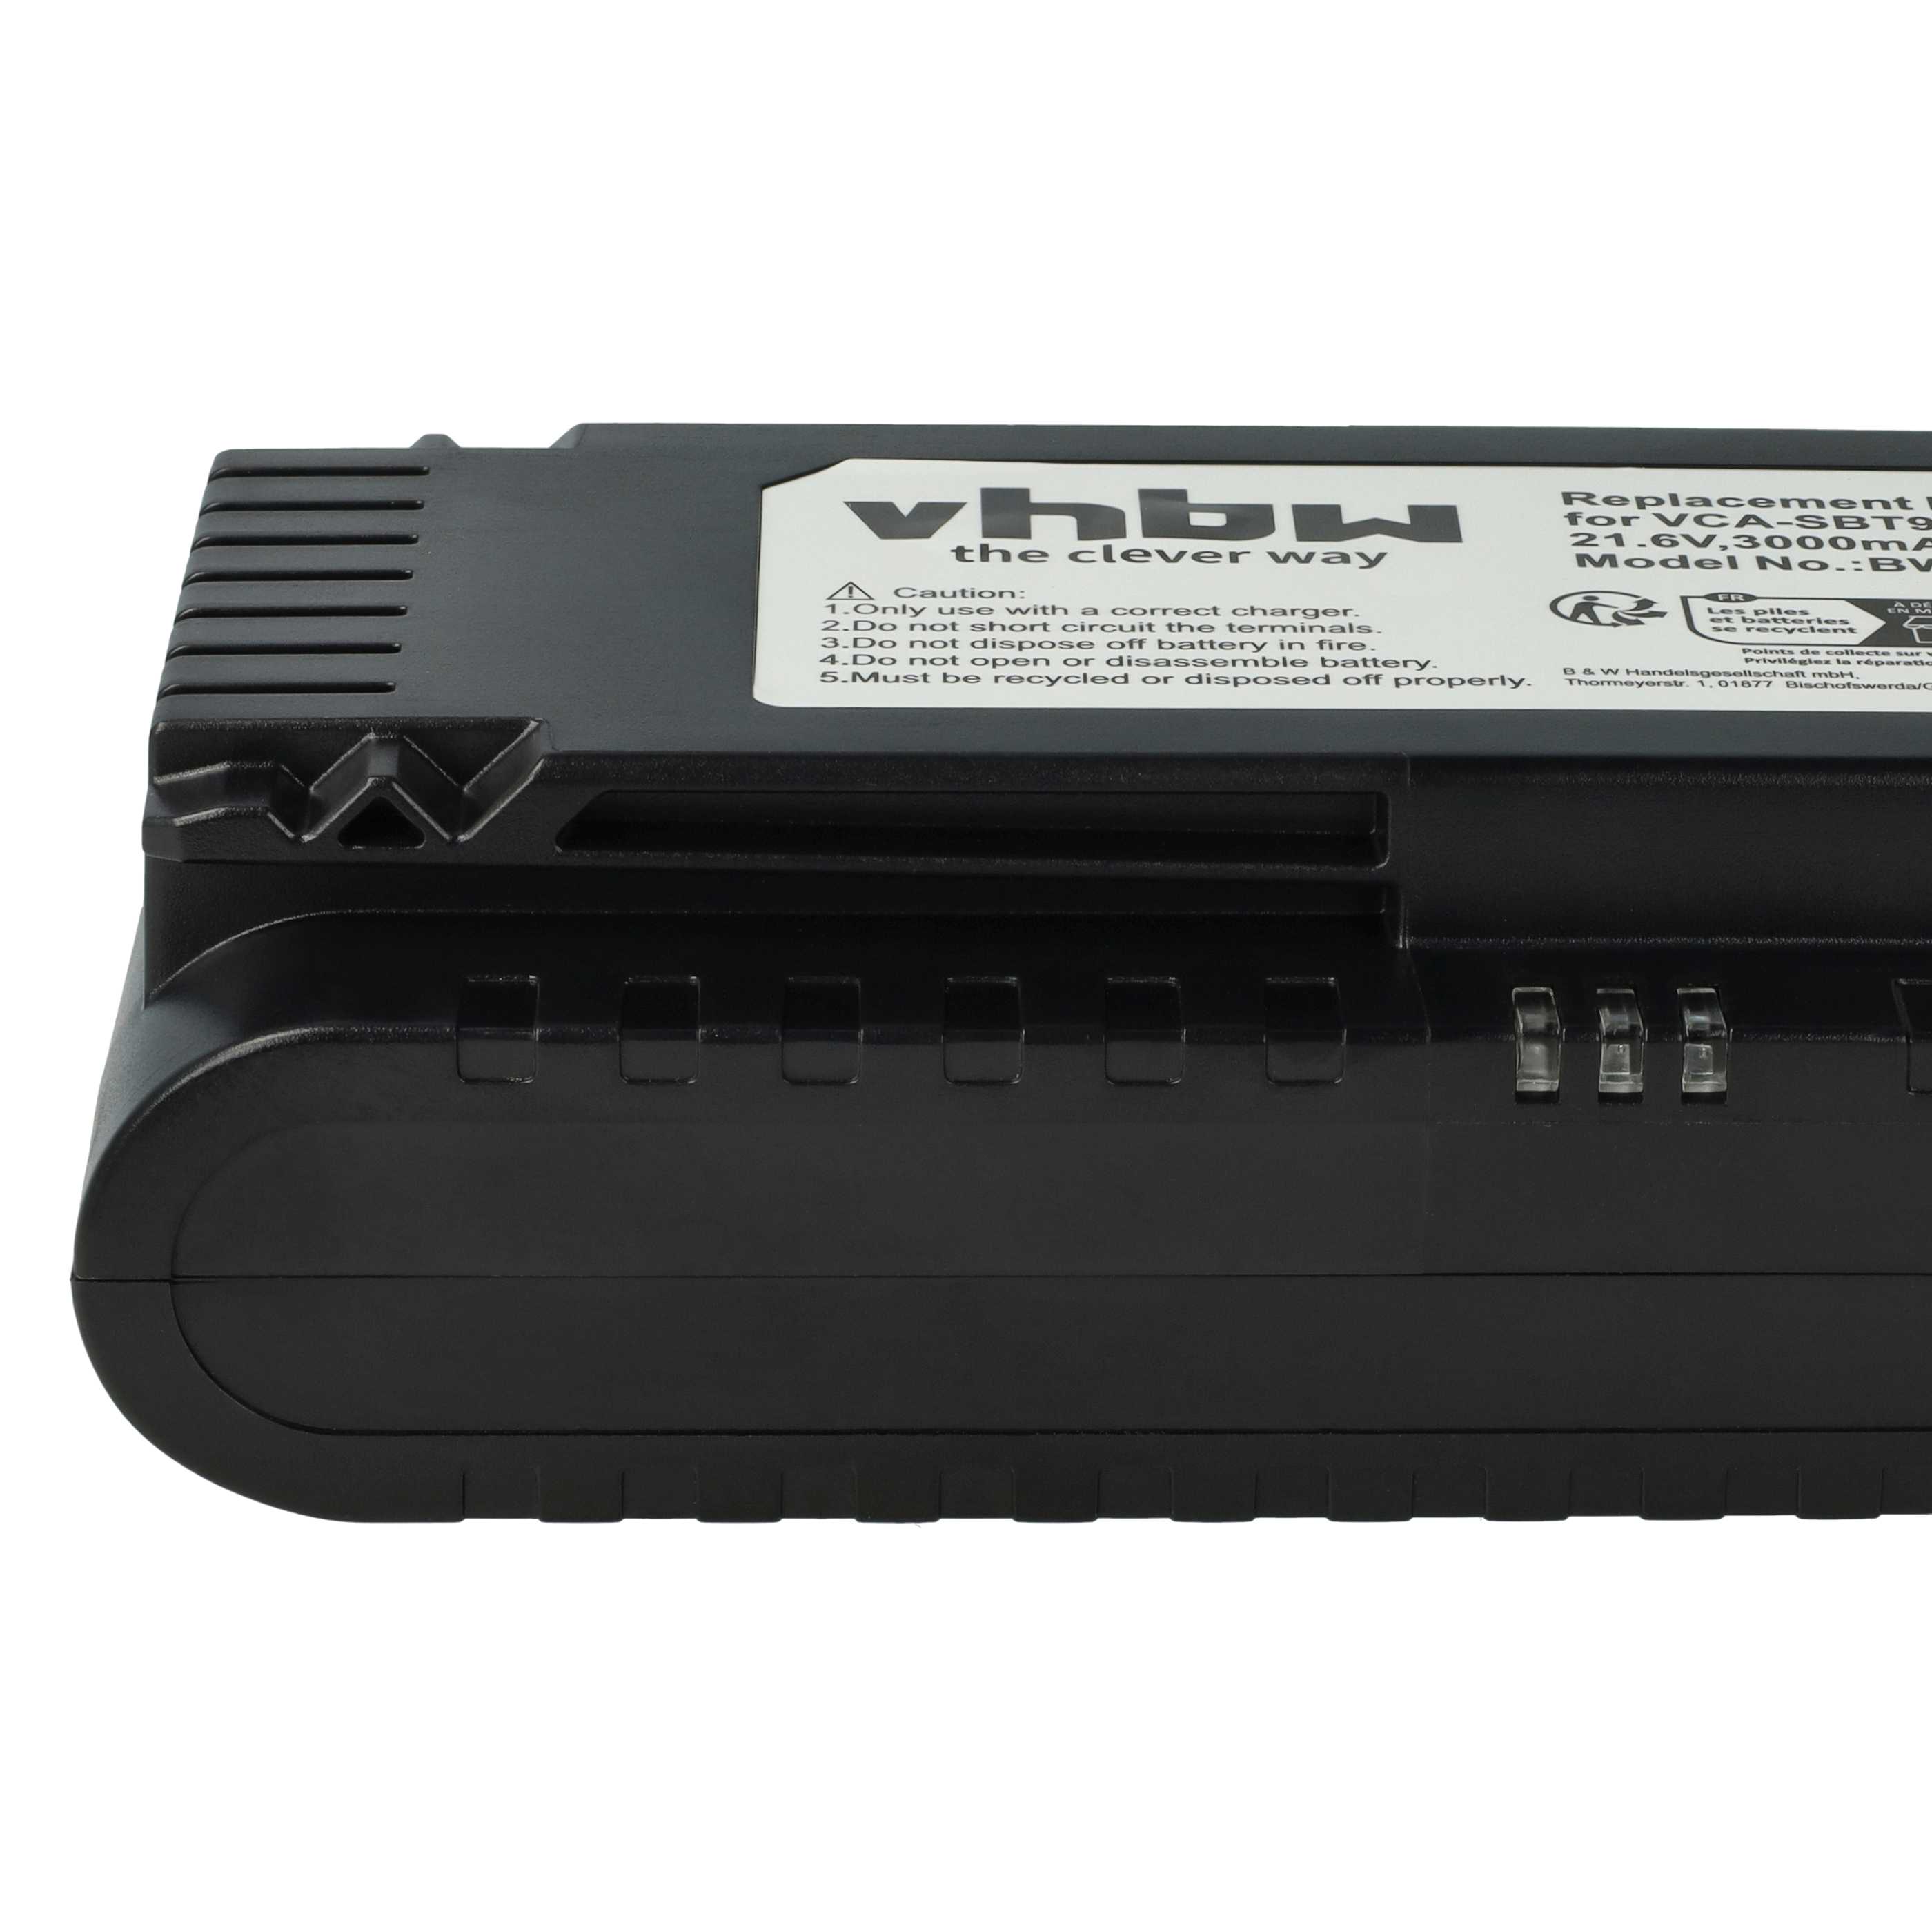 Akumulator do odkurzacza zamiennik Samsung VCA-SBT90E, VCA-SBT90, DJ96-00221A - 3000 mAh 21,6 V Li-Ion, czarny